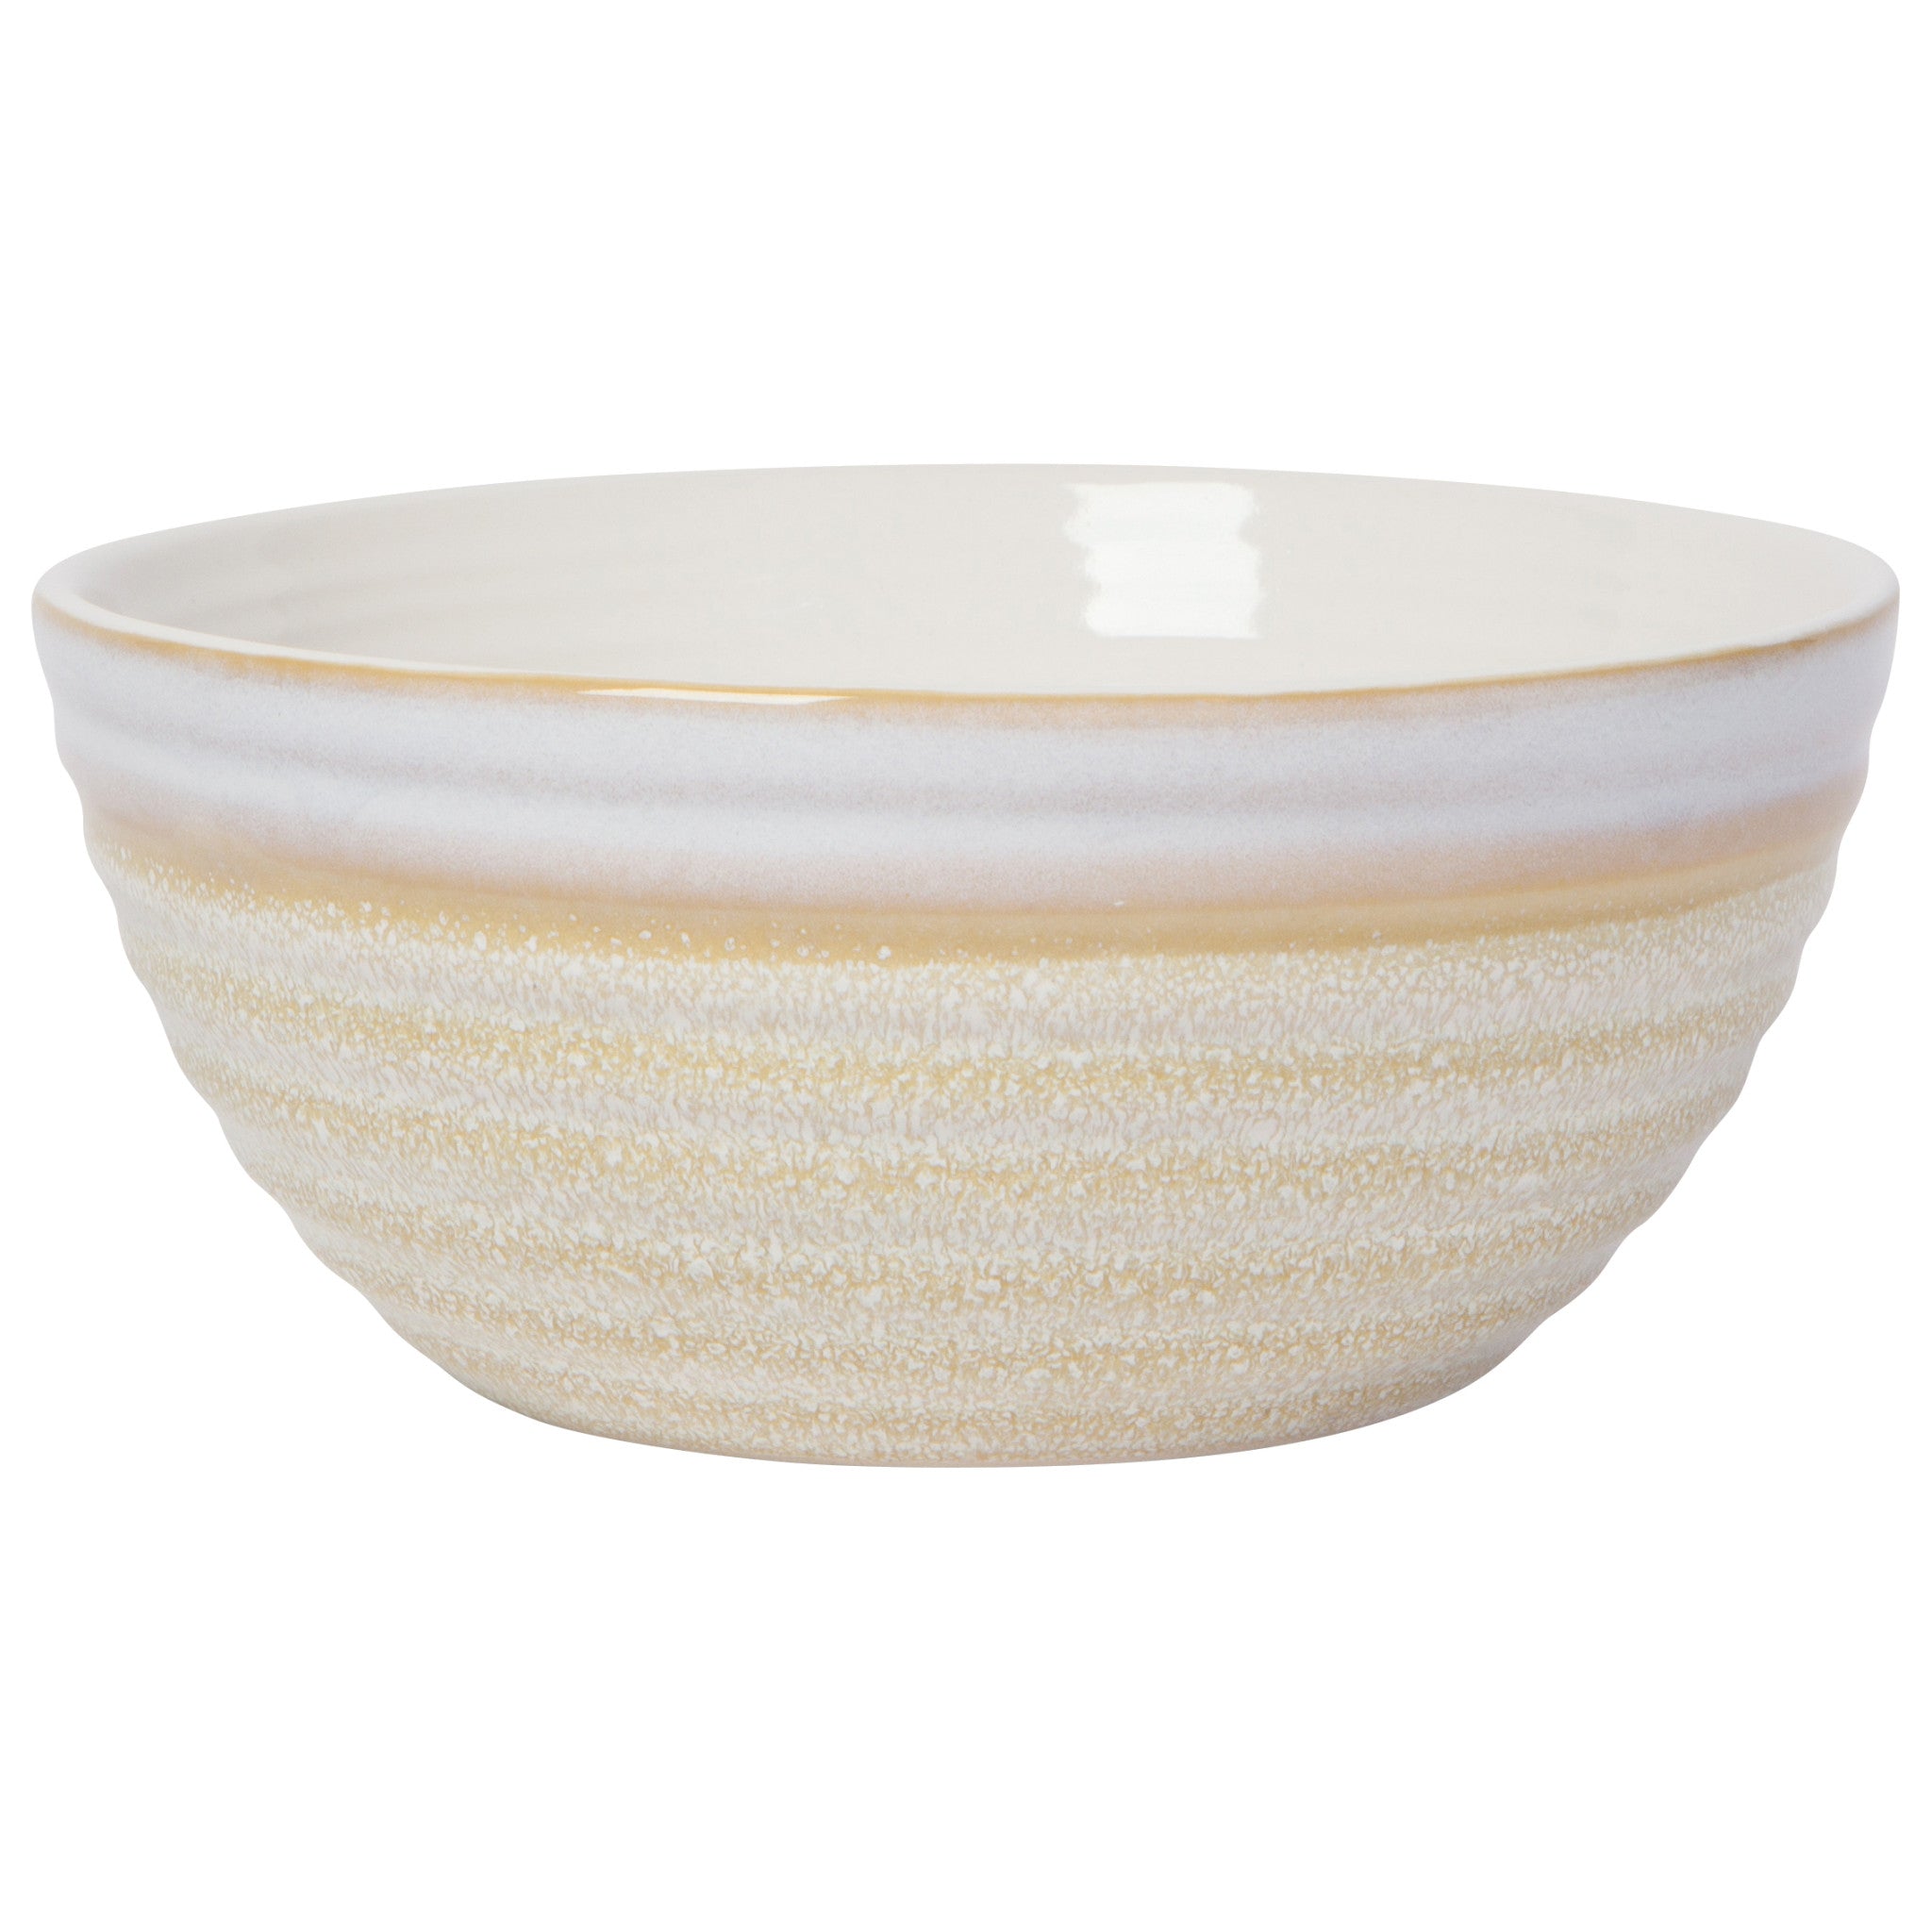 Bowl - Stoneware Reactive Glaze